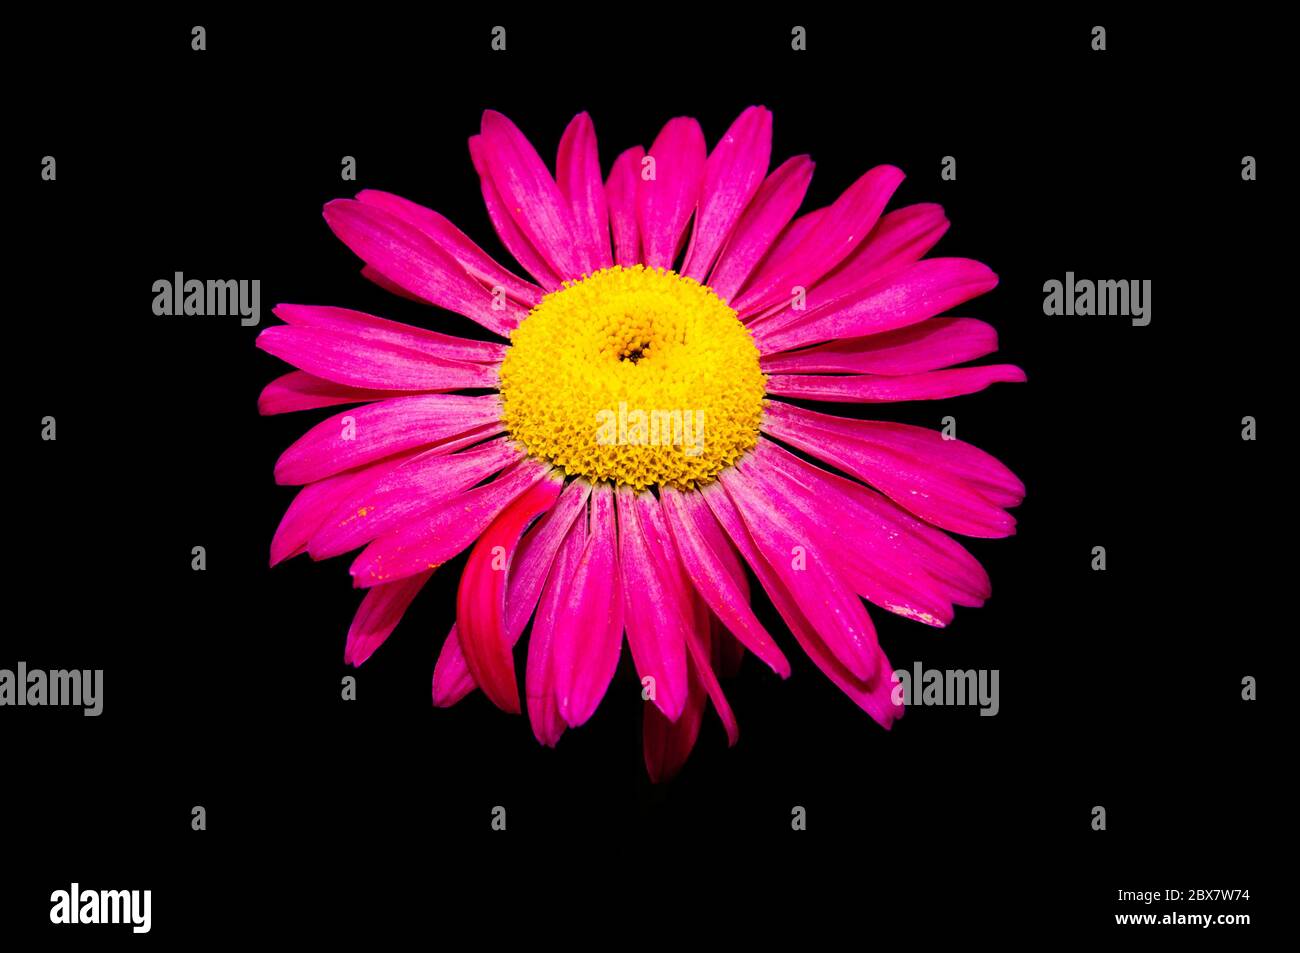 Pink daisy on black background. Stock Photo